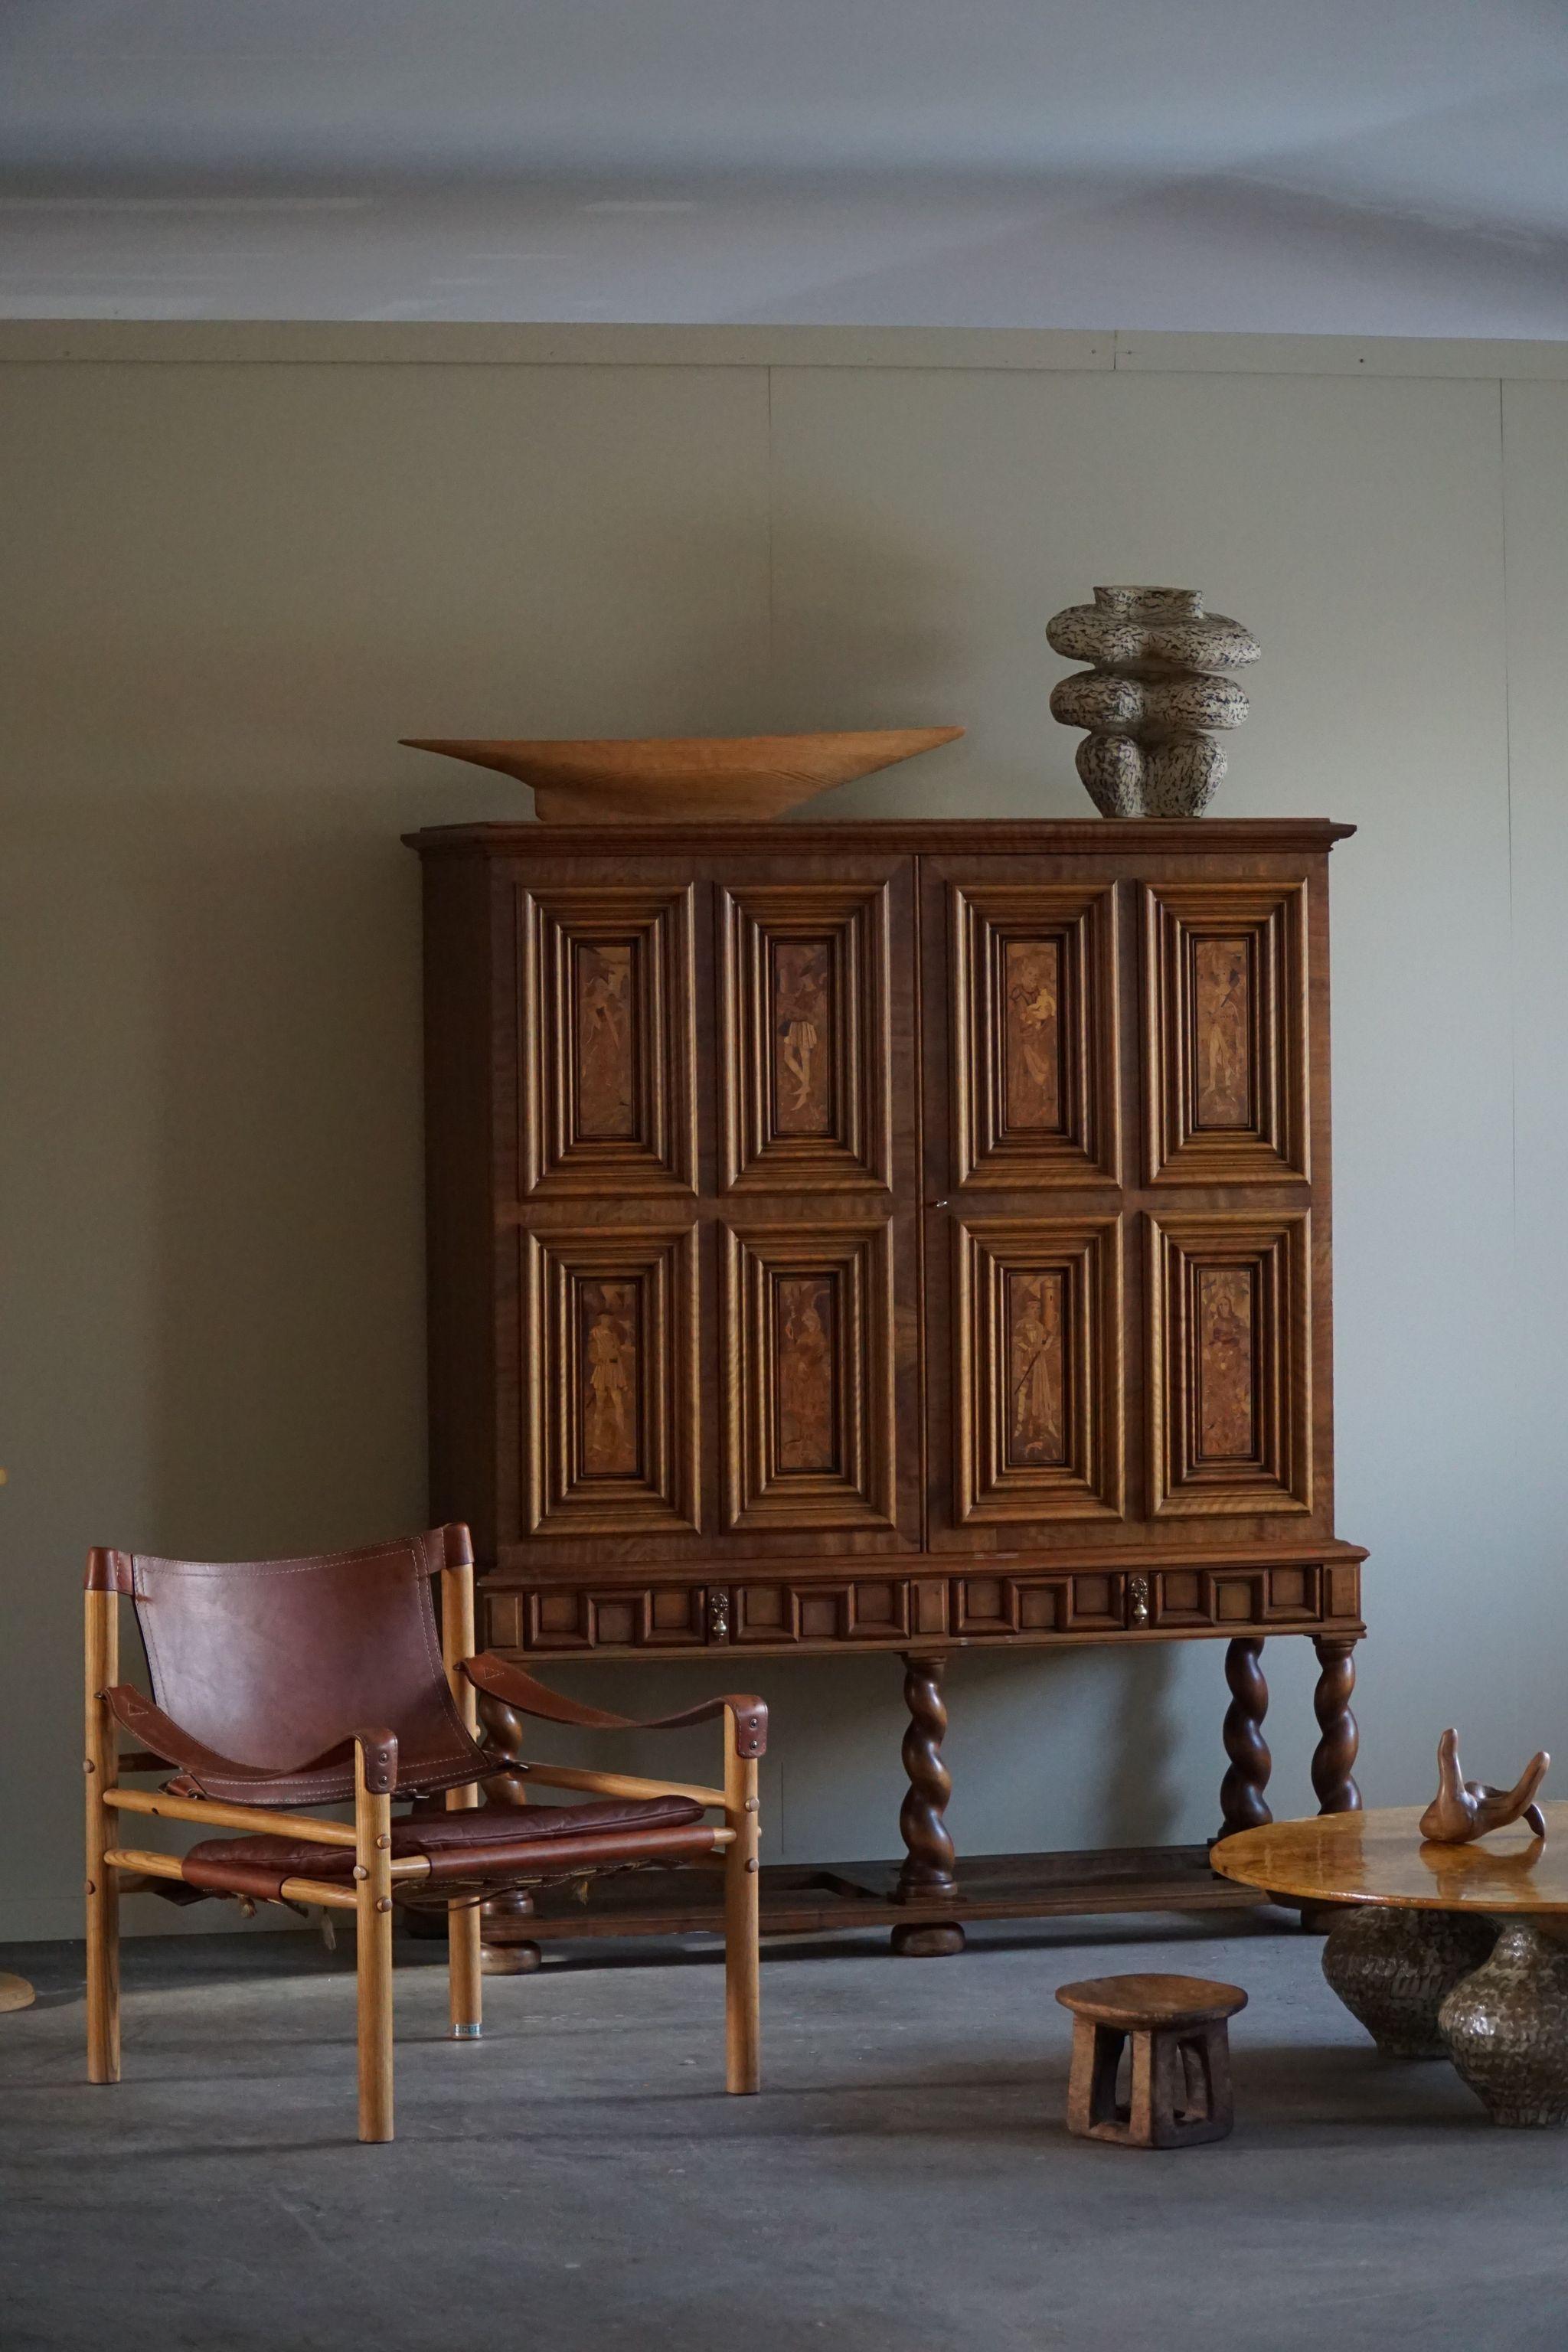 Sculptural Geometric Cabinet in Birch & Intarsia, Swedish Grace, Modern, 1930s For Sale 6